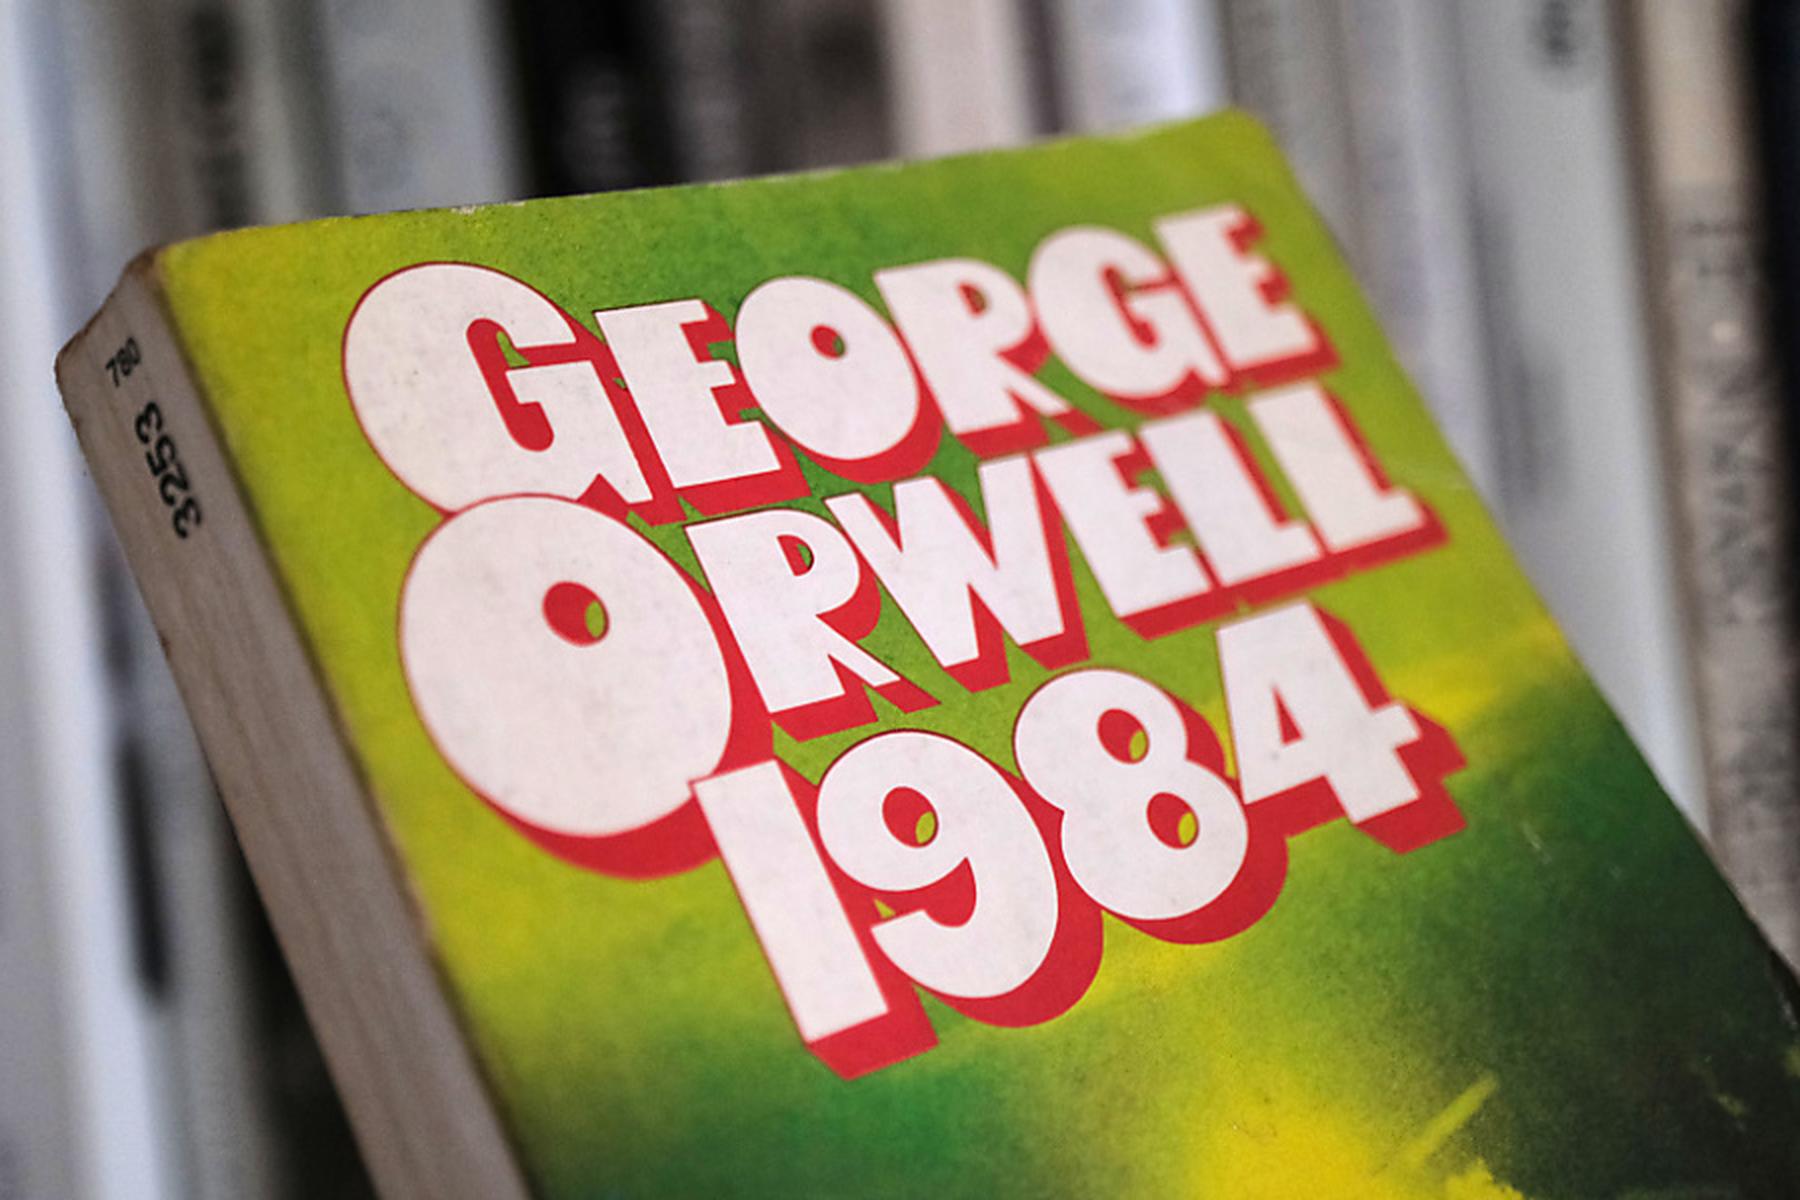 London: George Orwells Roman 